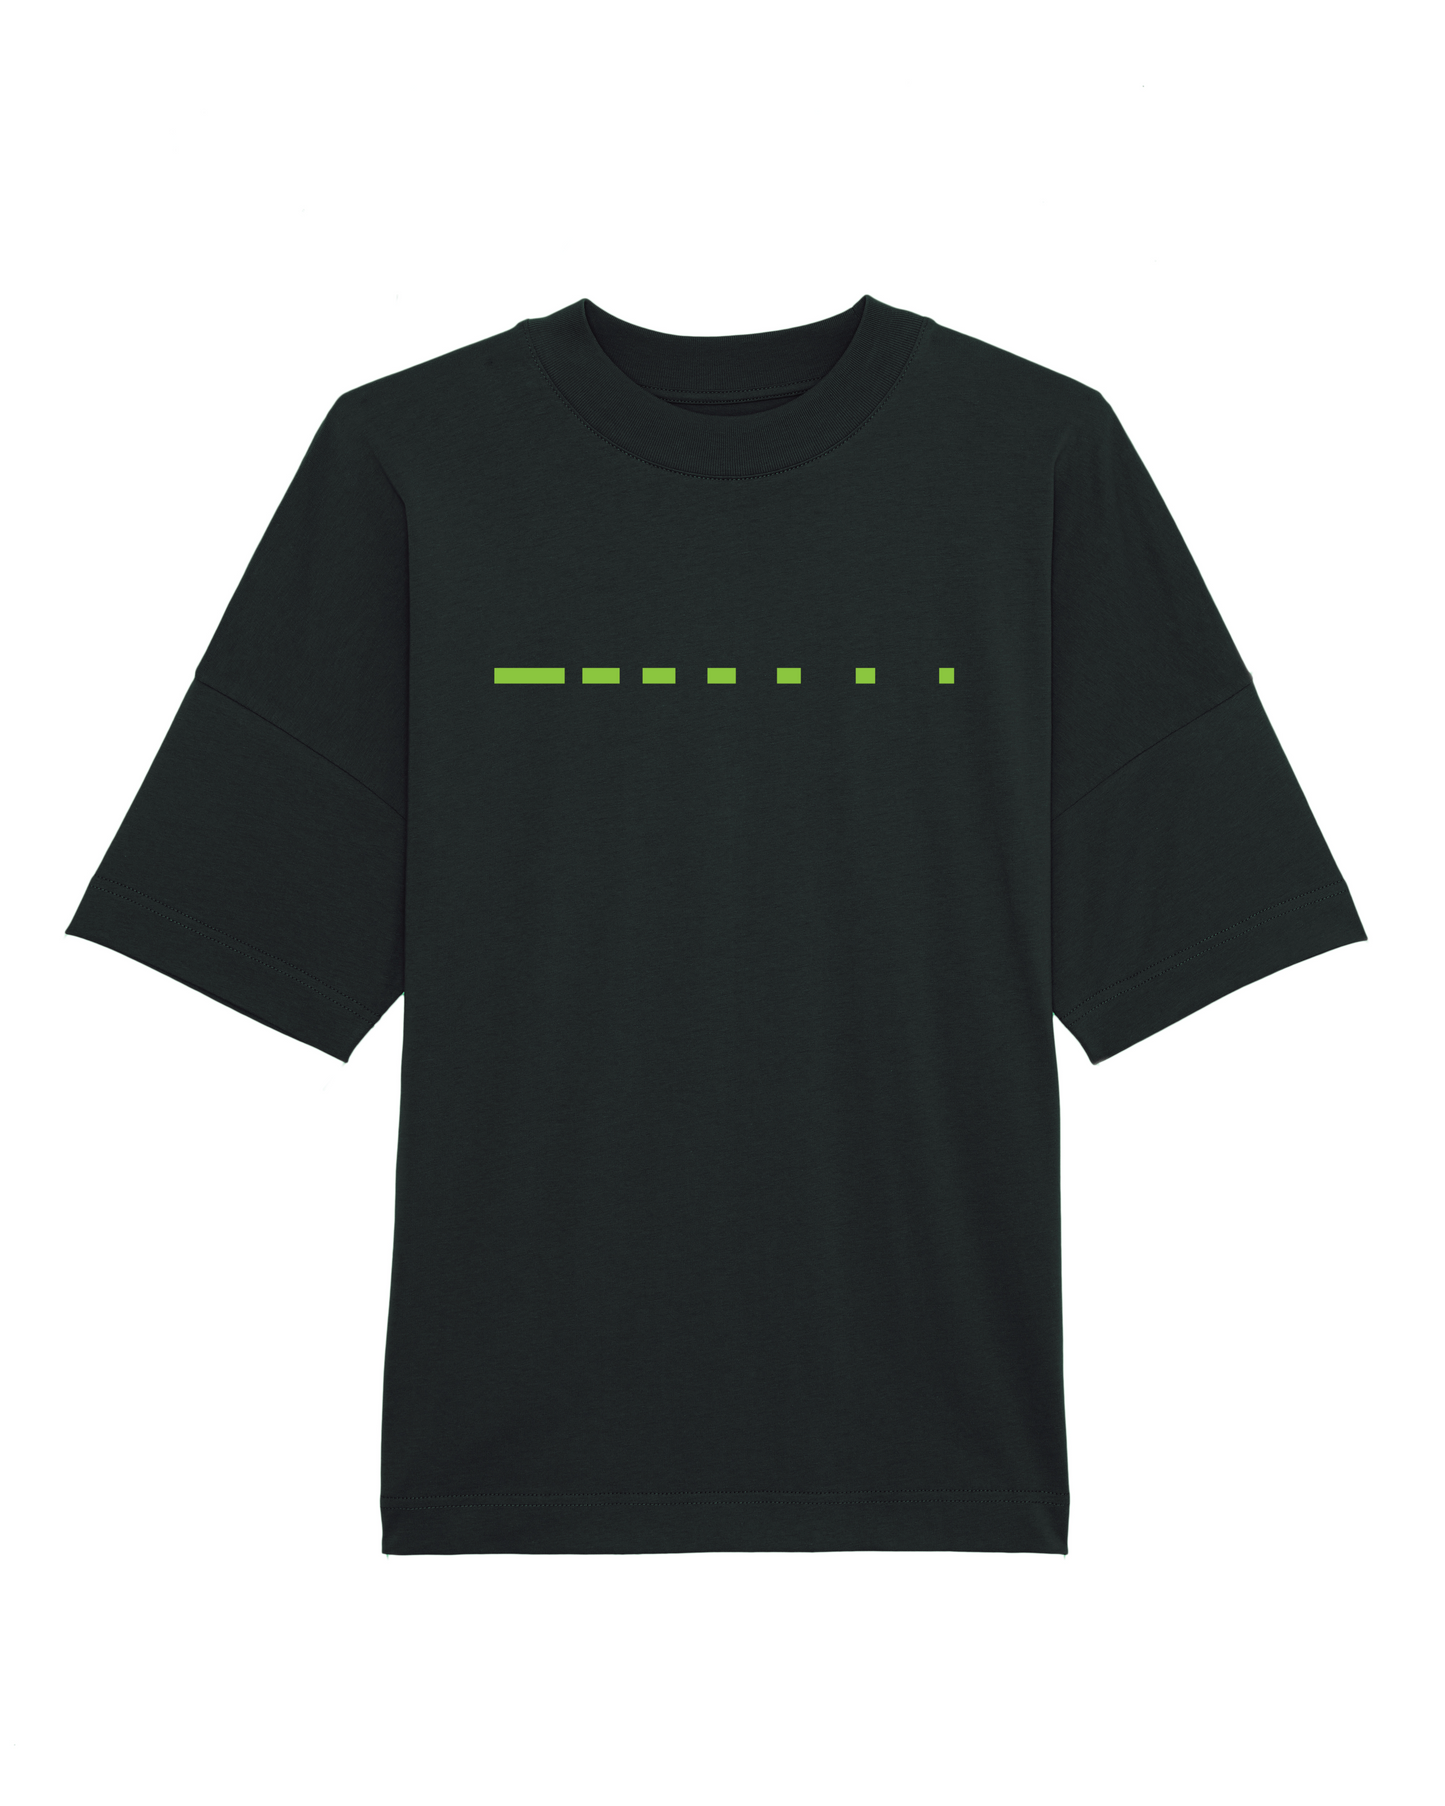 Green Iconic Elements T-shirt [Black]